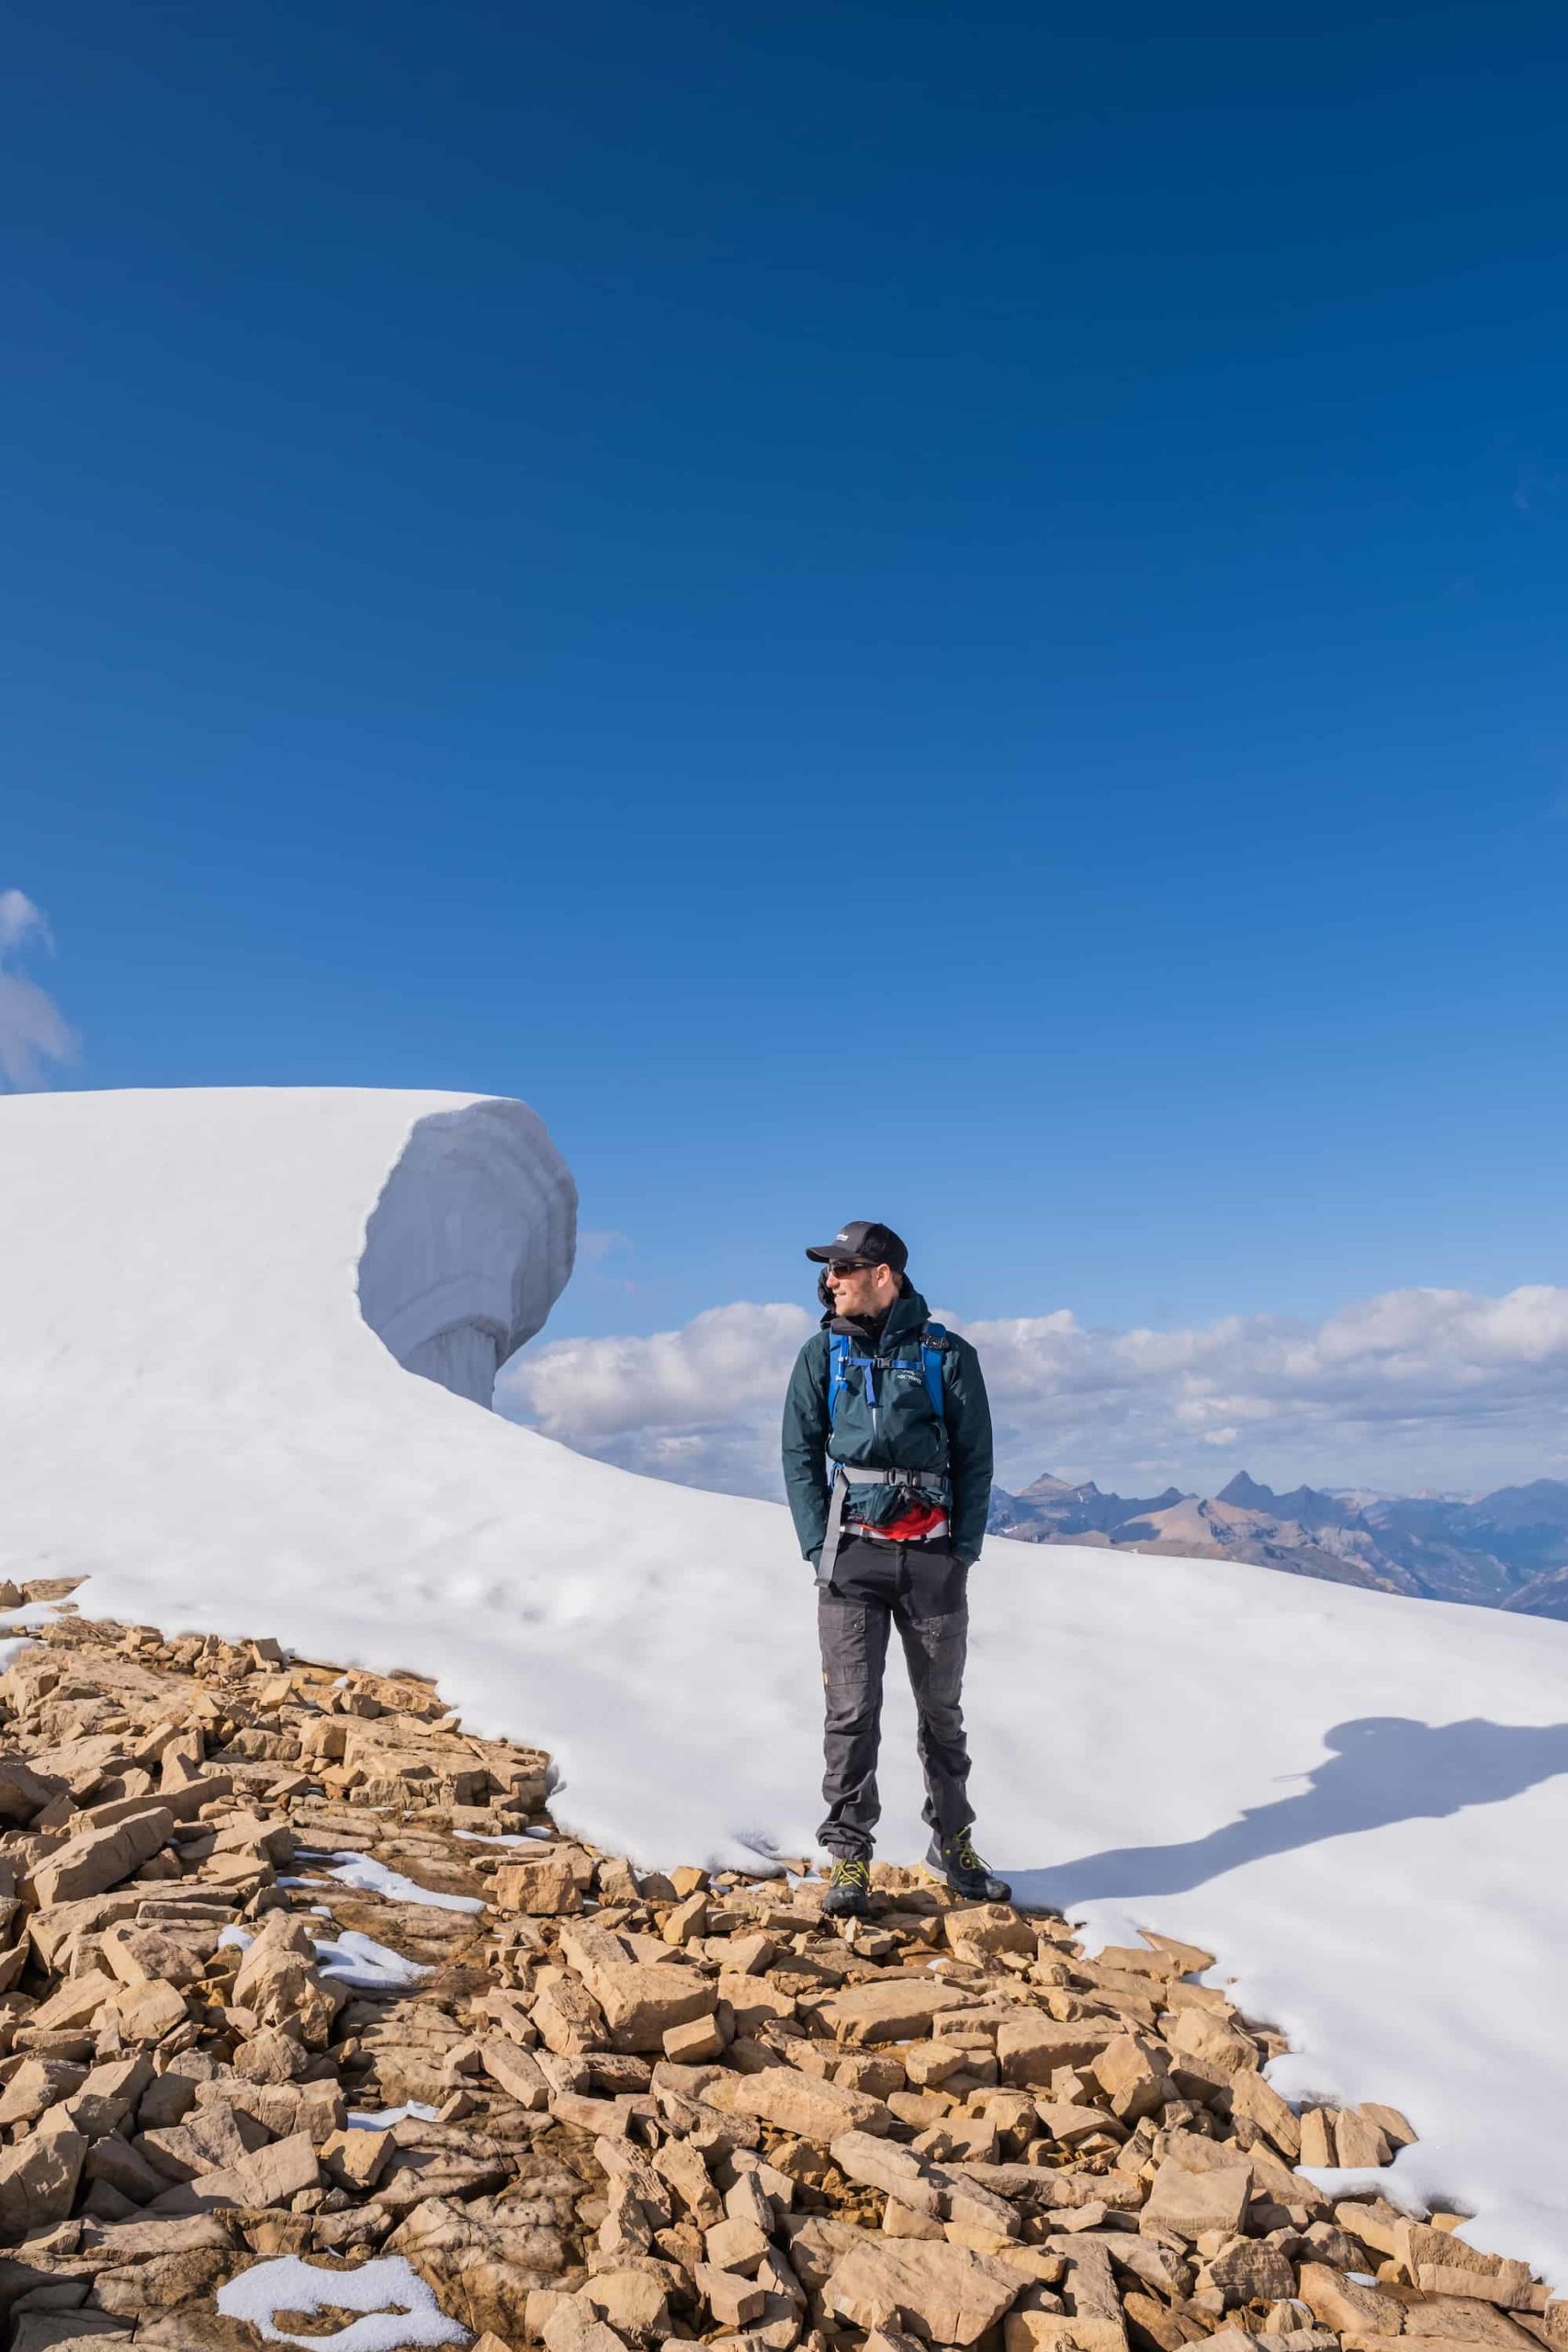 cornice at the summit of observation peak